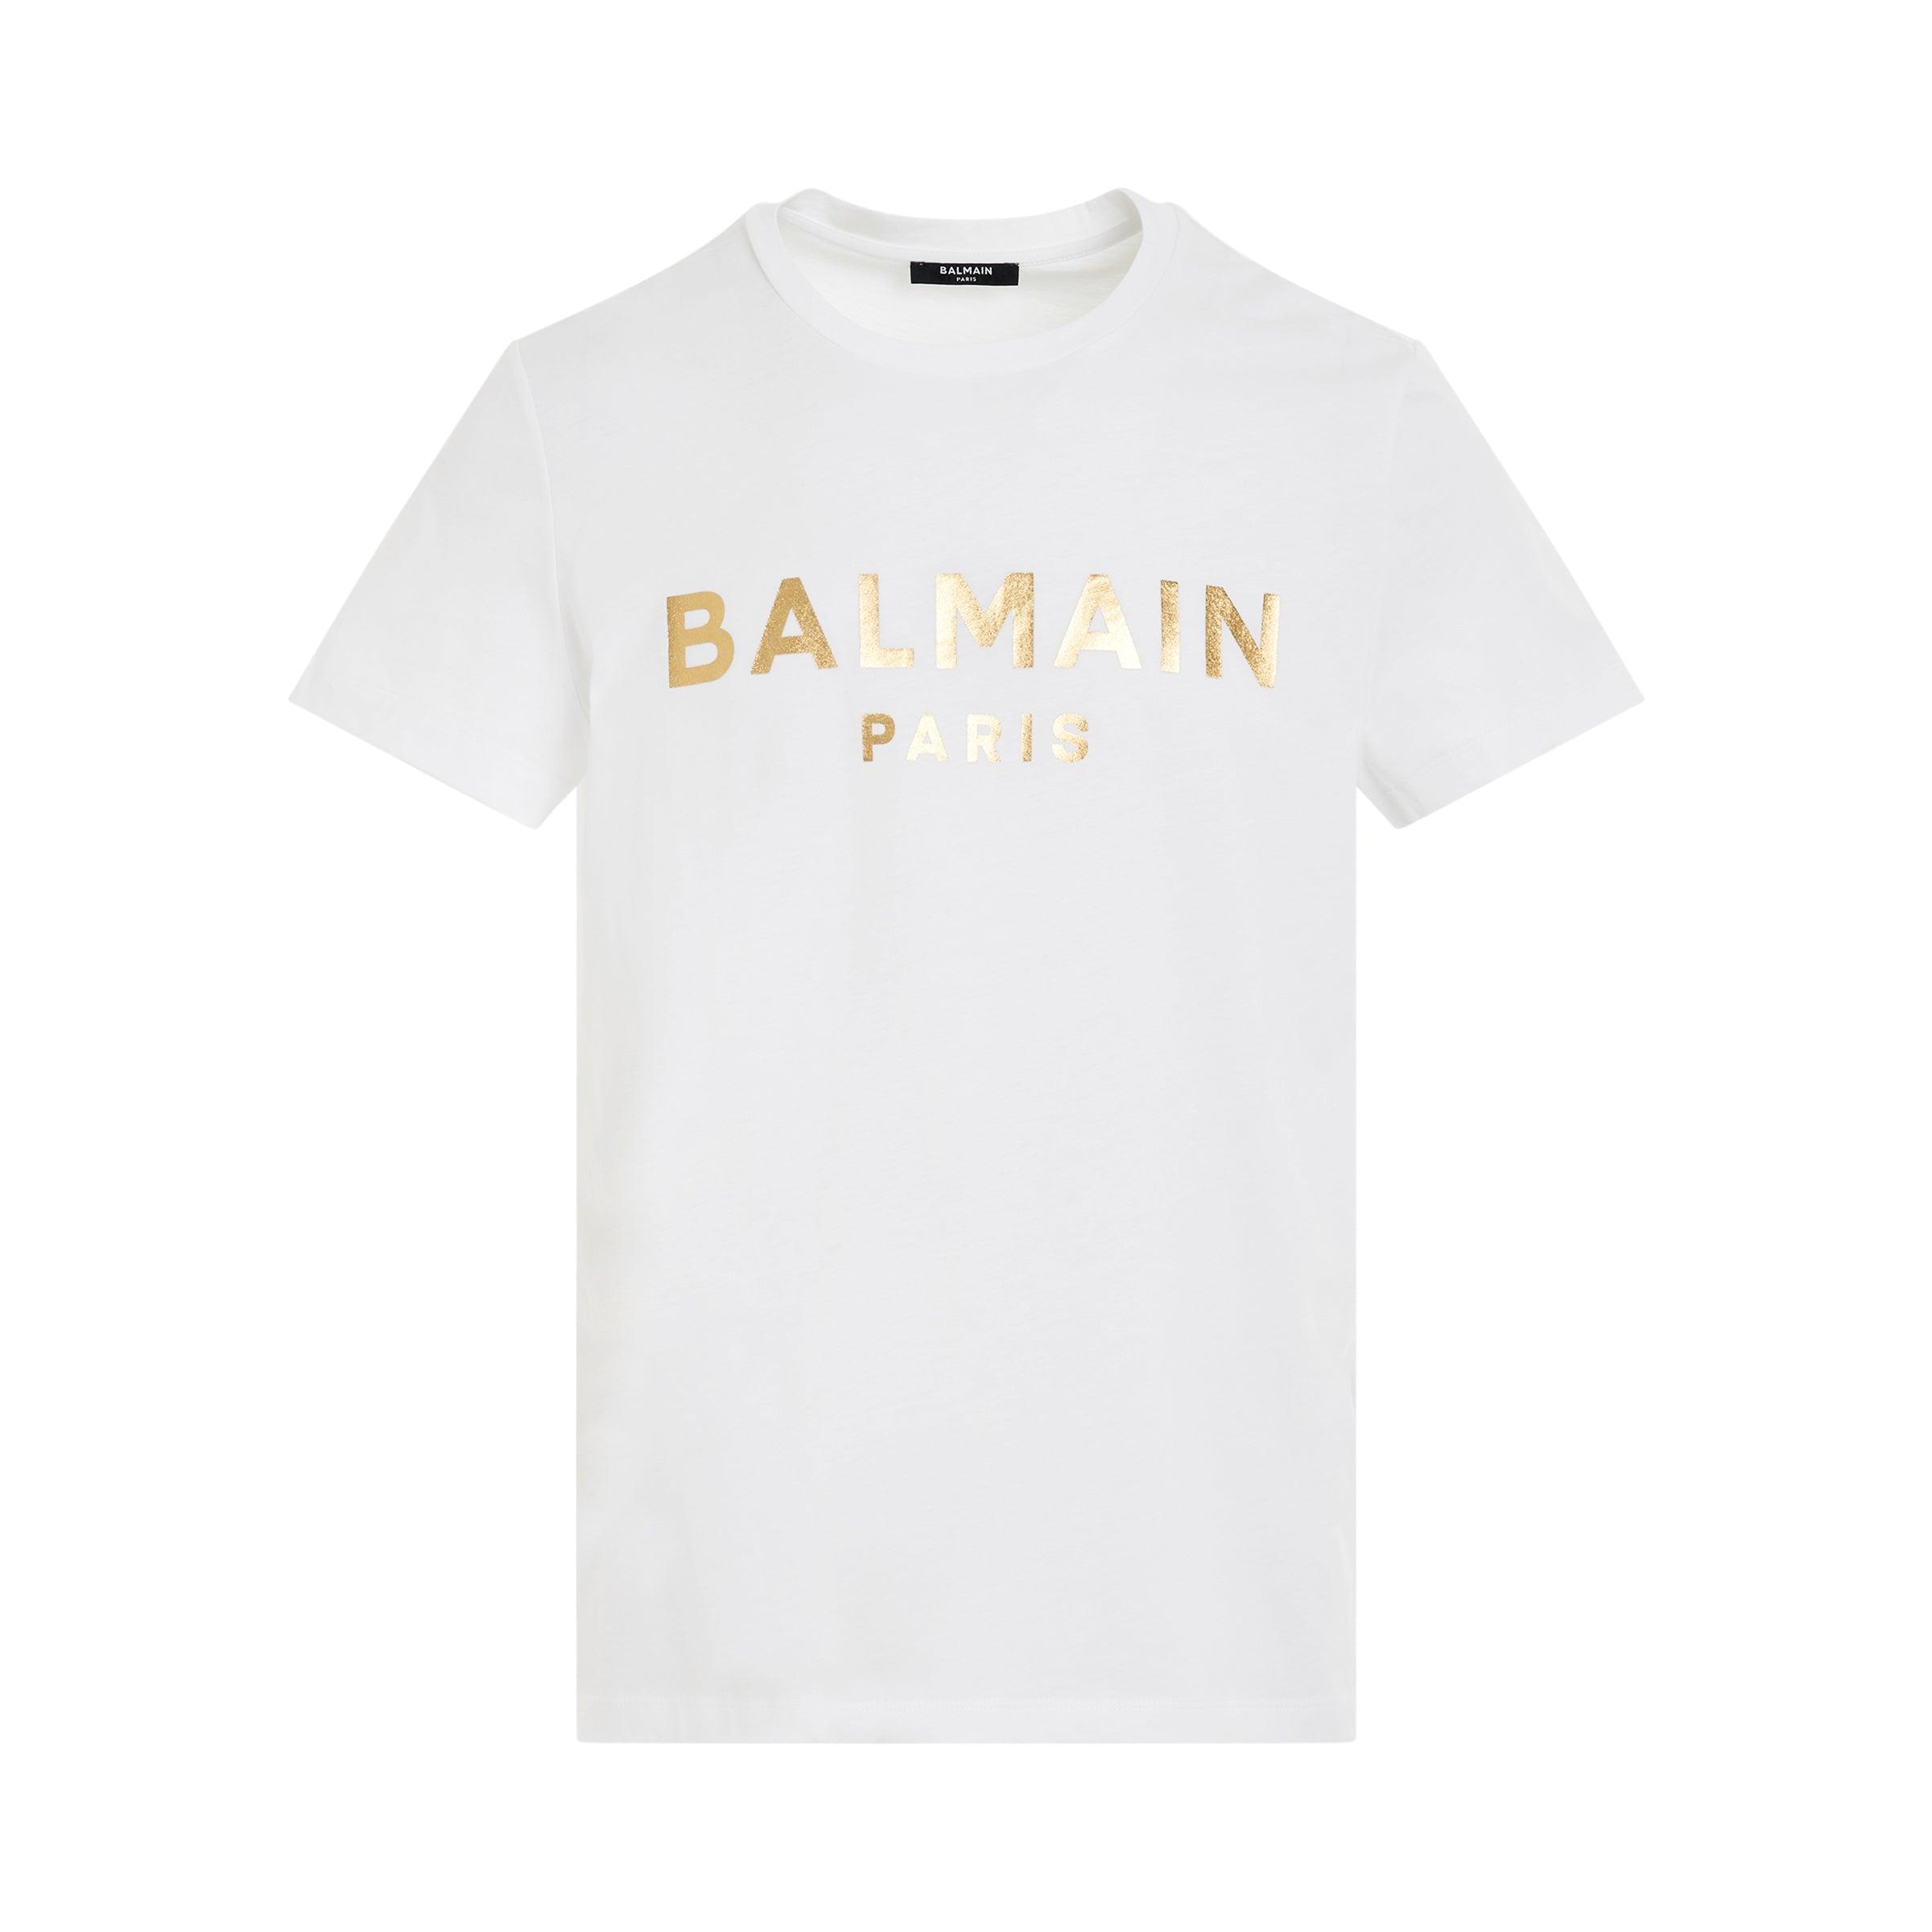 Balmain Foil Classic Fit T-shirt In White/gold for Men | Lyst